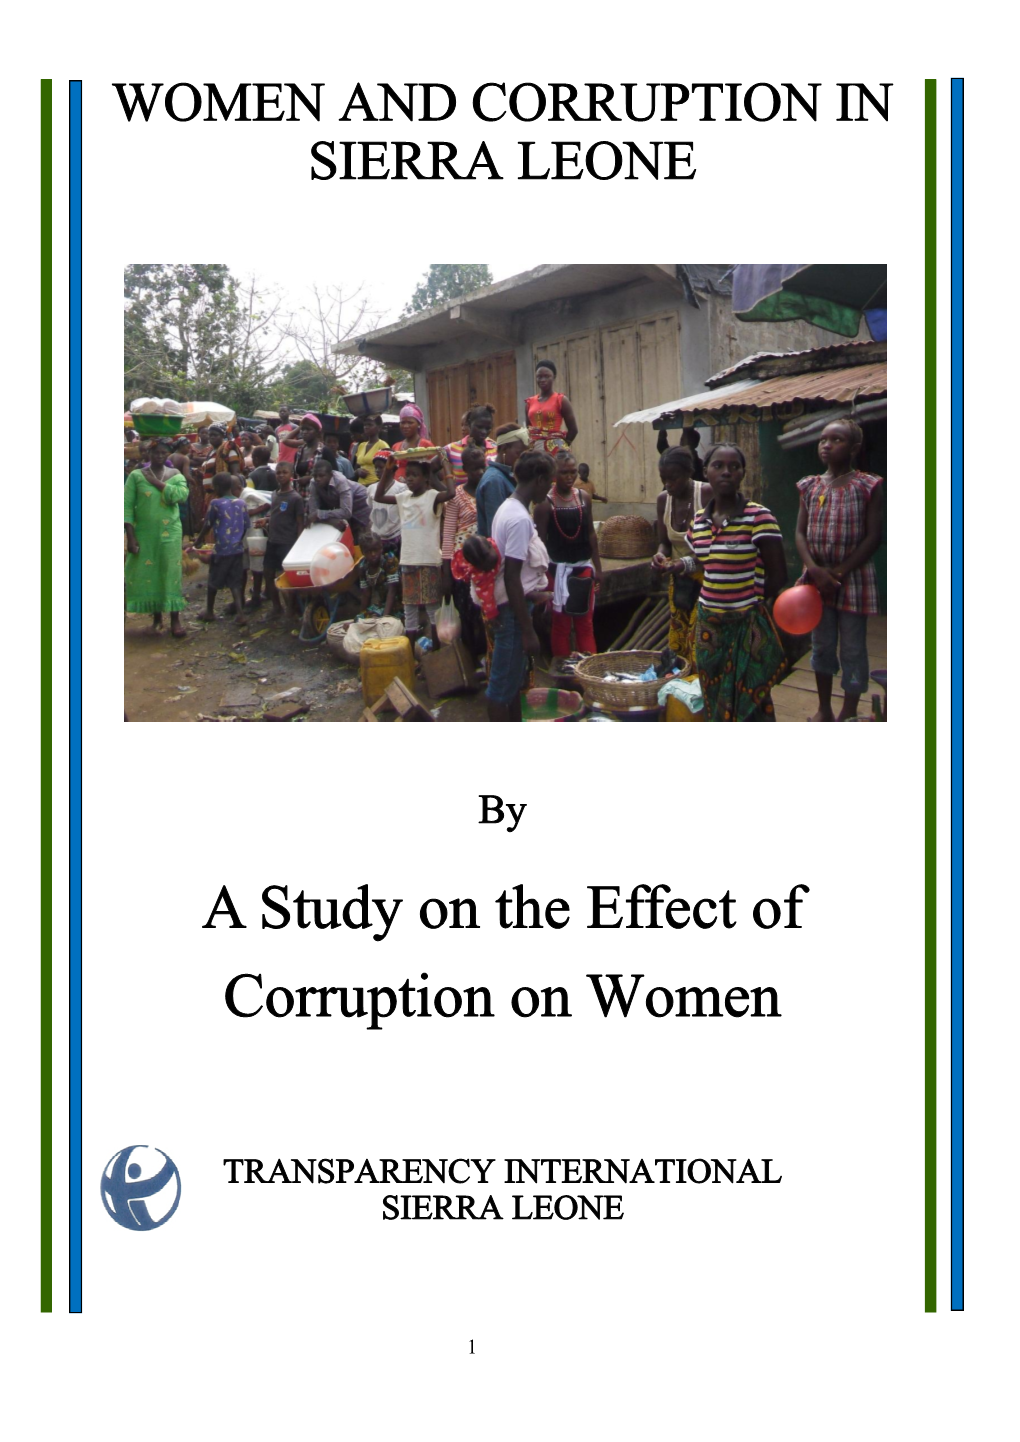 TISL Report of Survey on Women and Corruption in Sierra Leone